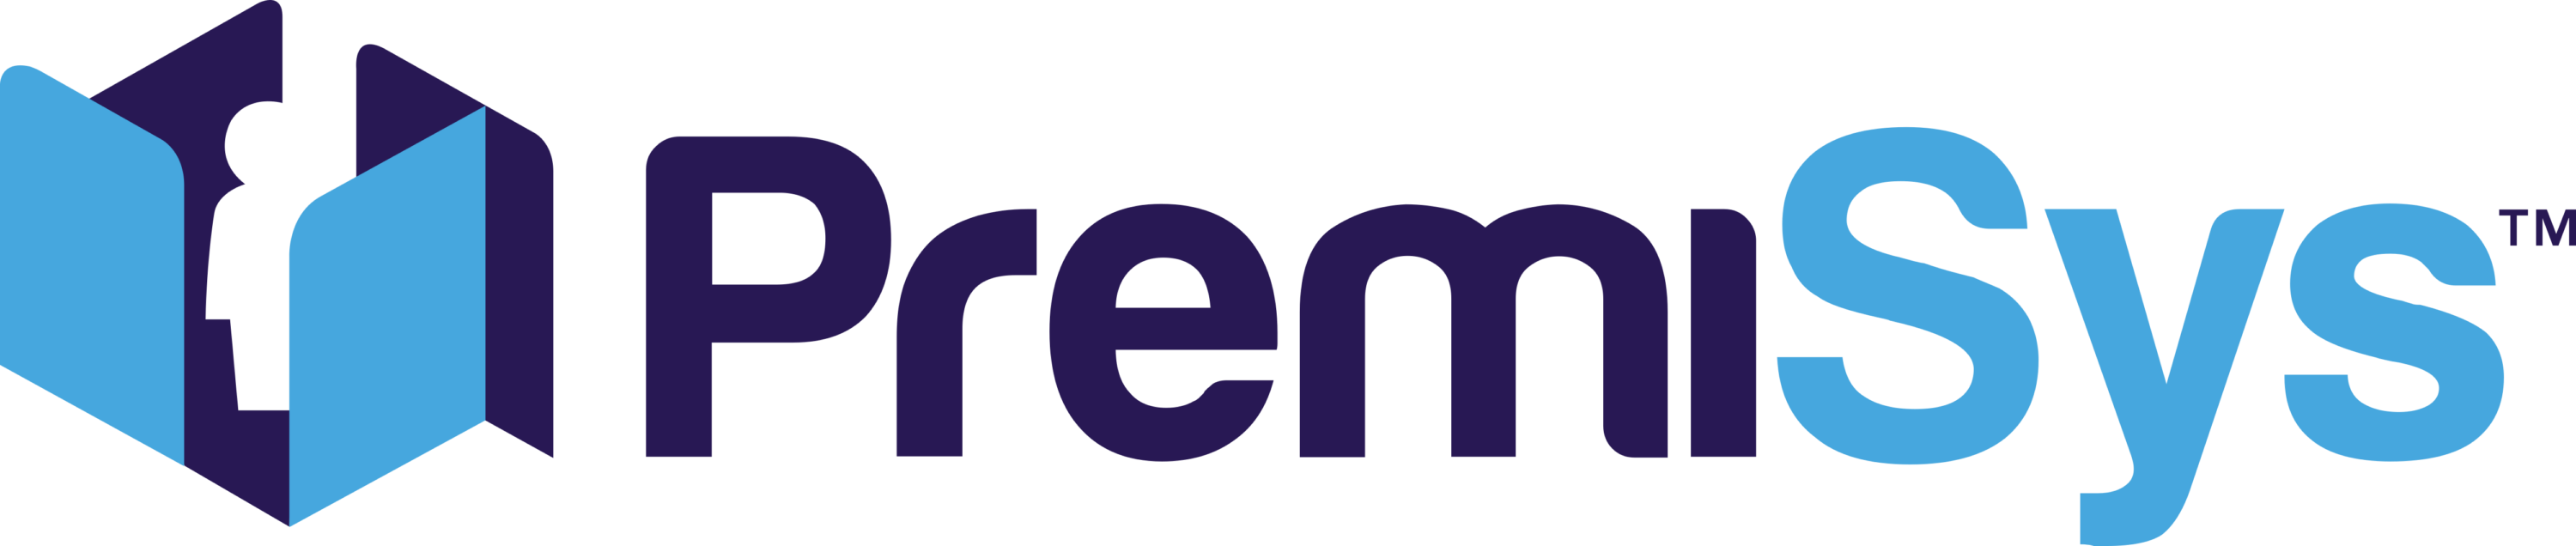 PremiSys Logo